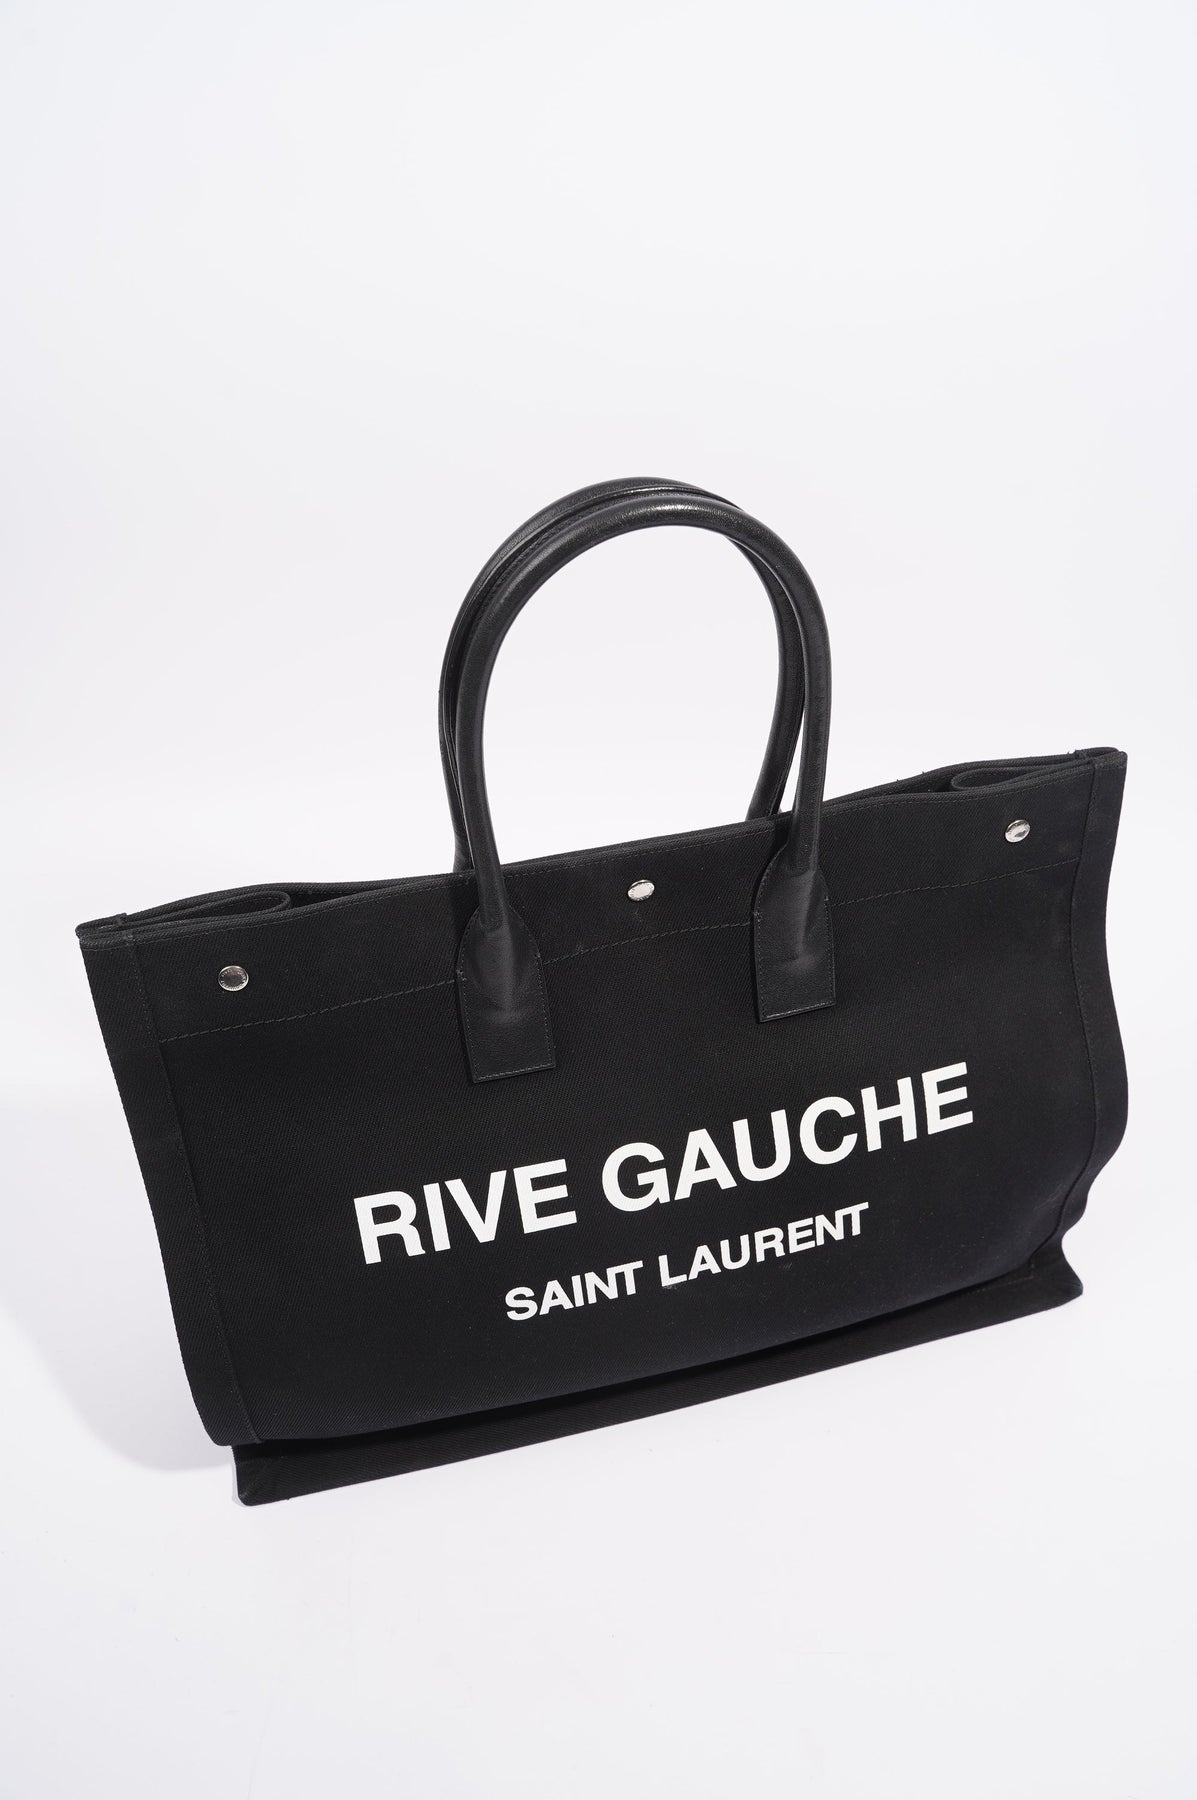 Saint Laurent Womens Rive Gauche Tote Brown / Beige – Luxe Collective